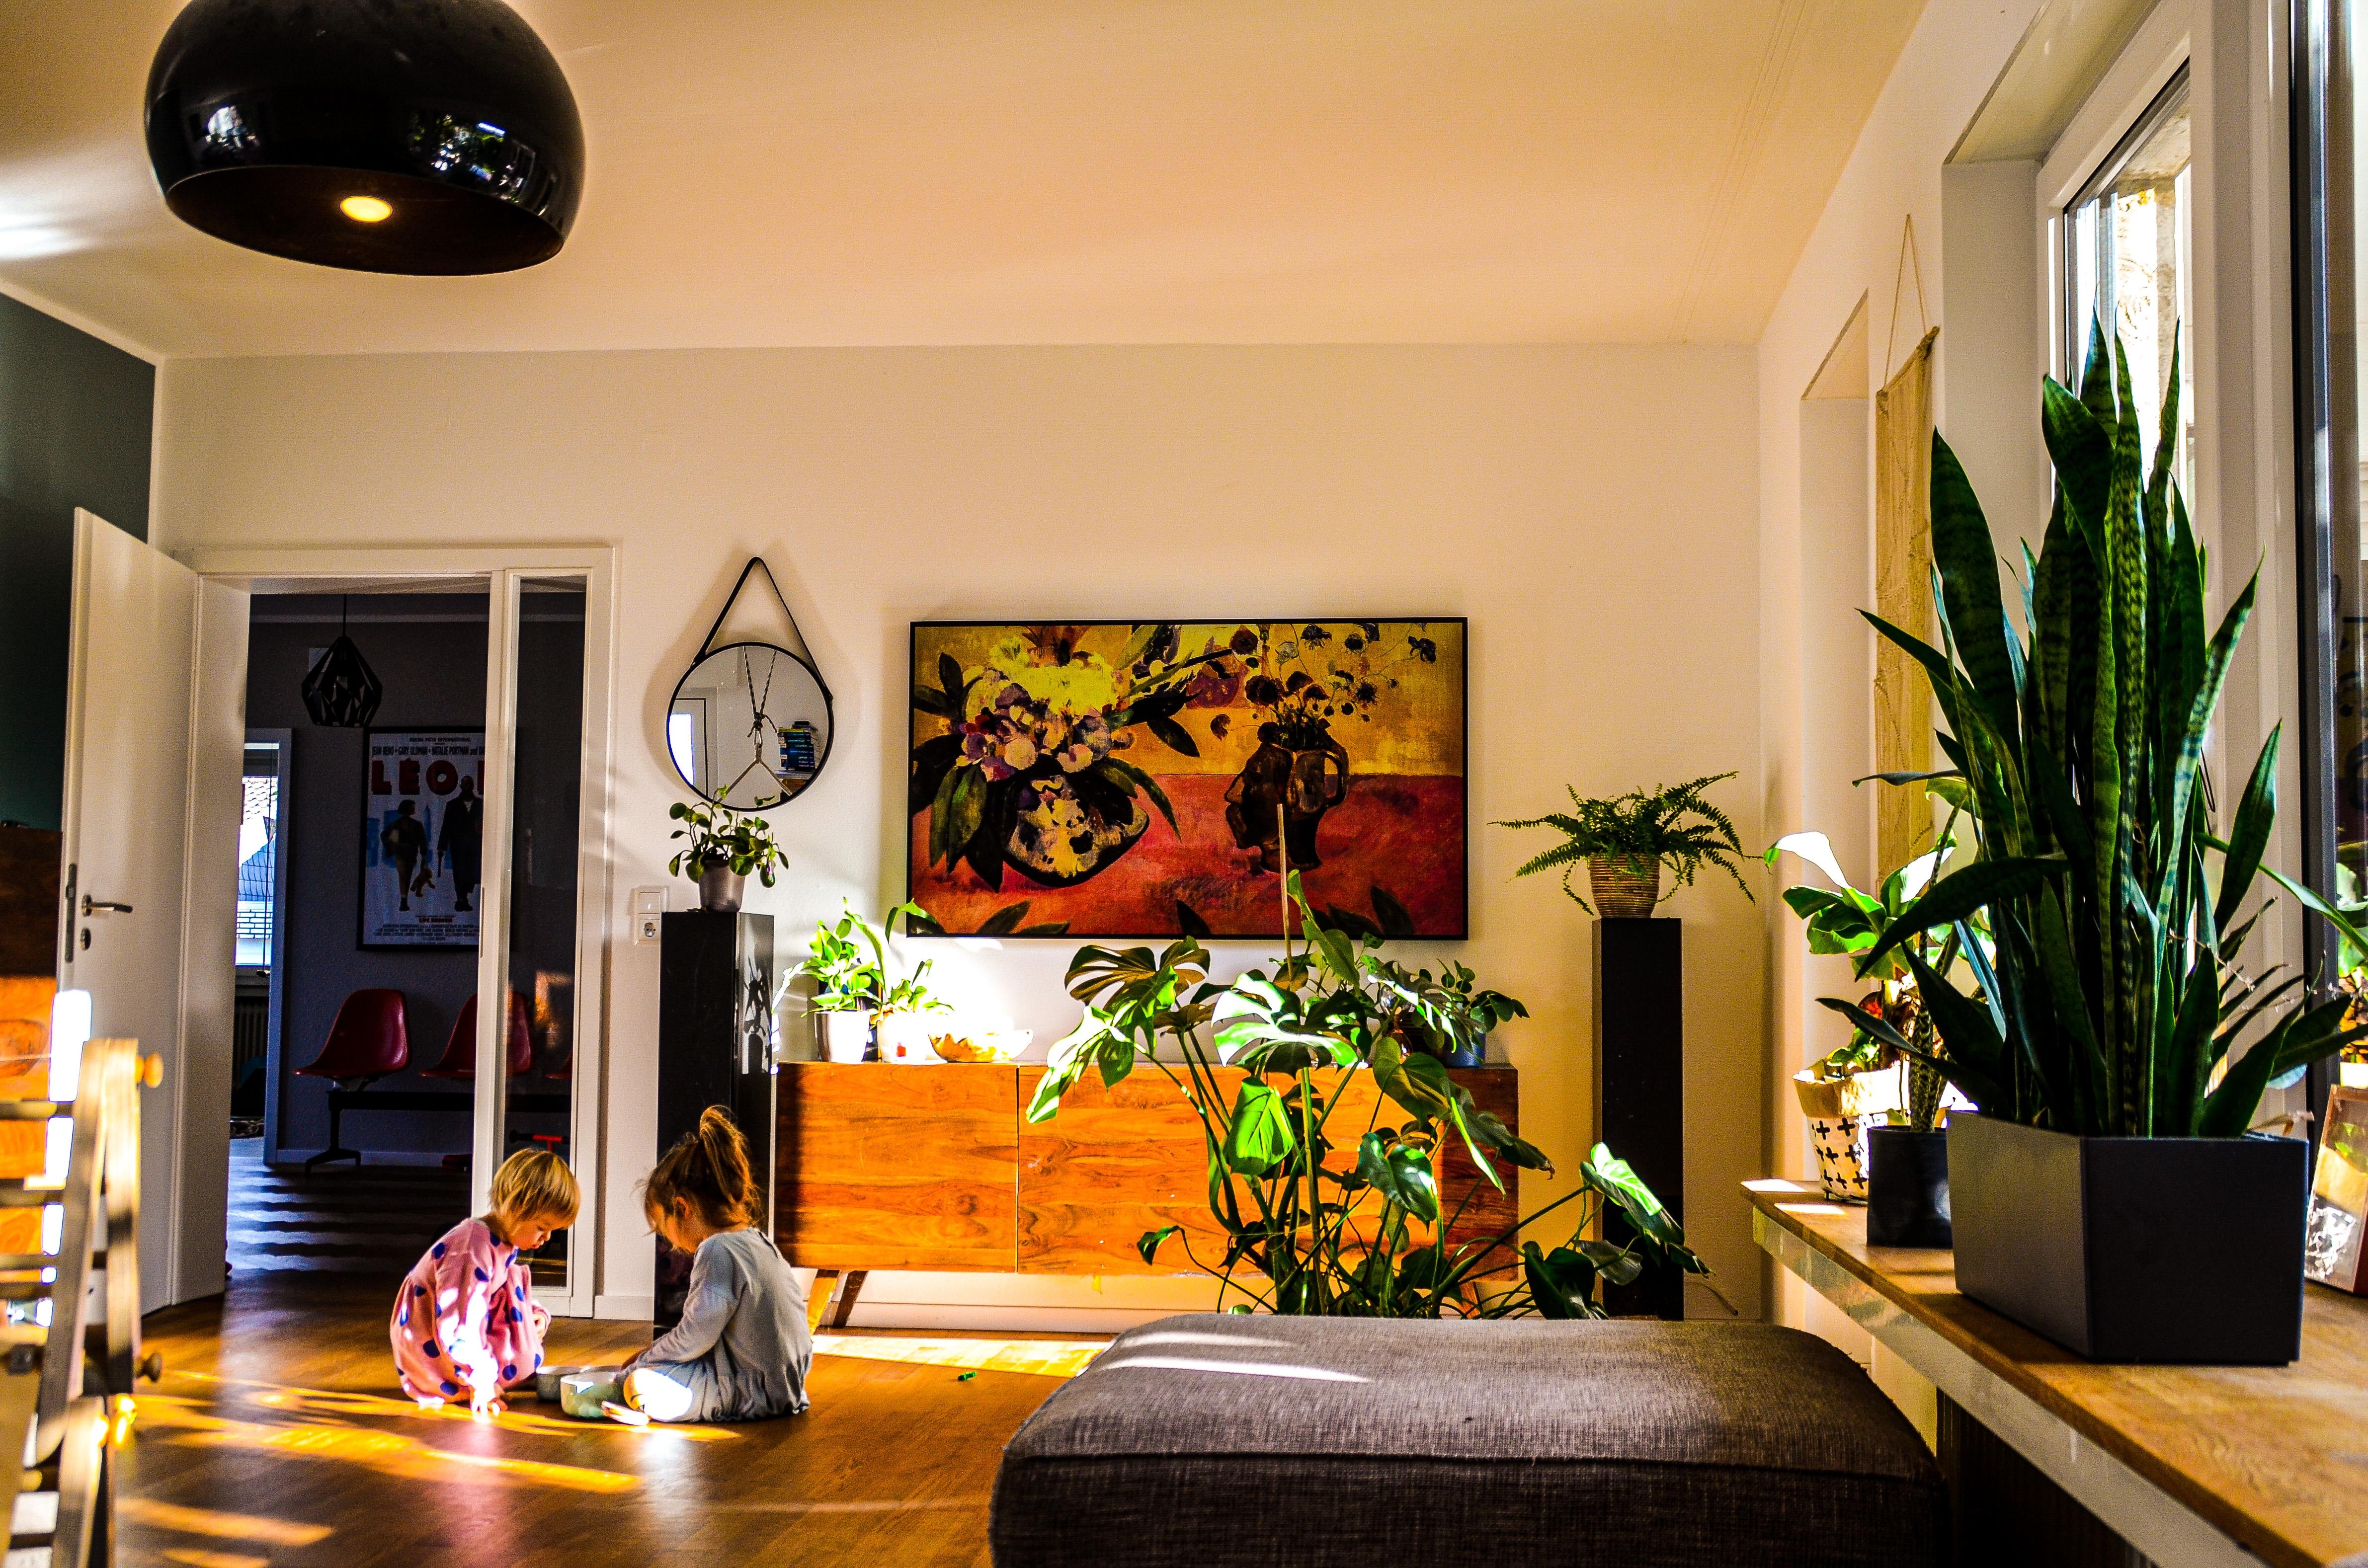 #wohnzimmer #livingroom #green #pflanzenliebe #sunisout